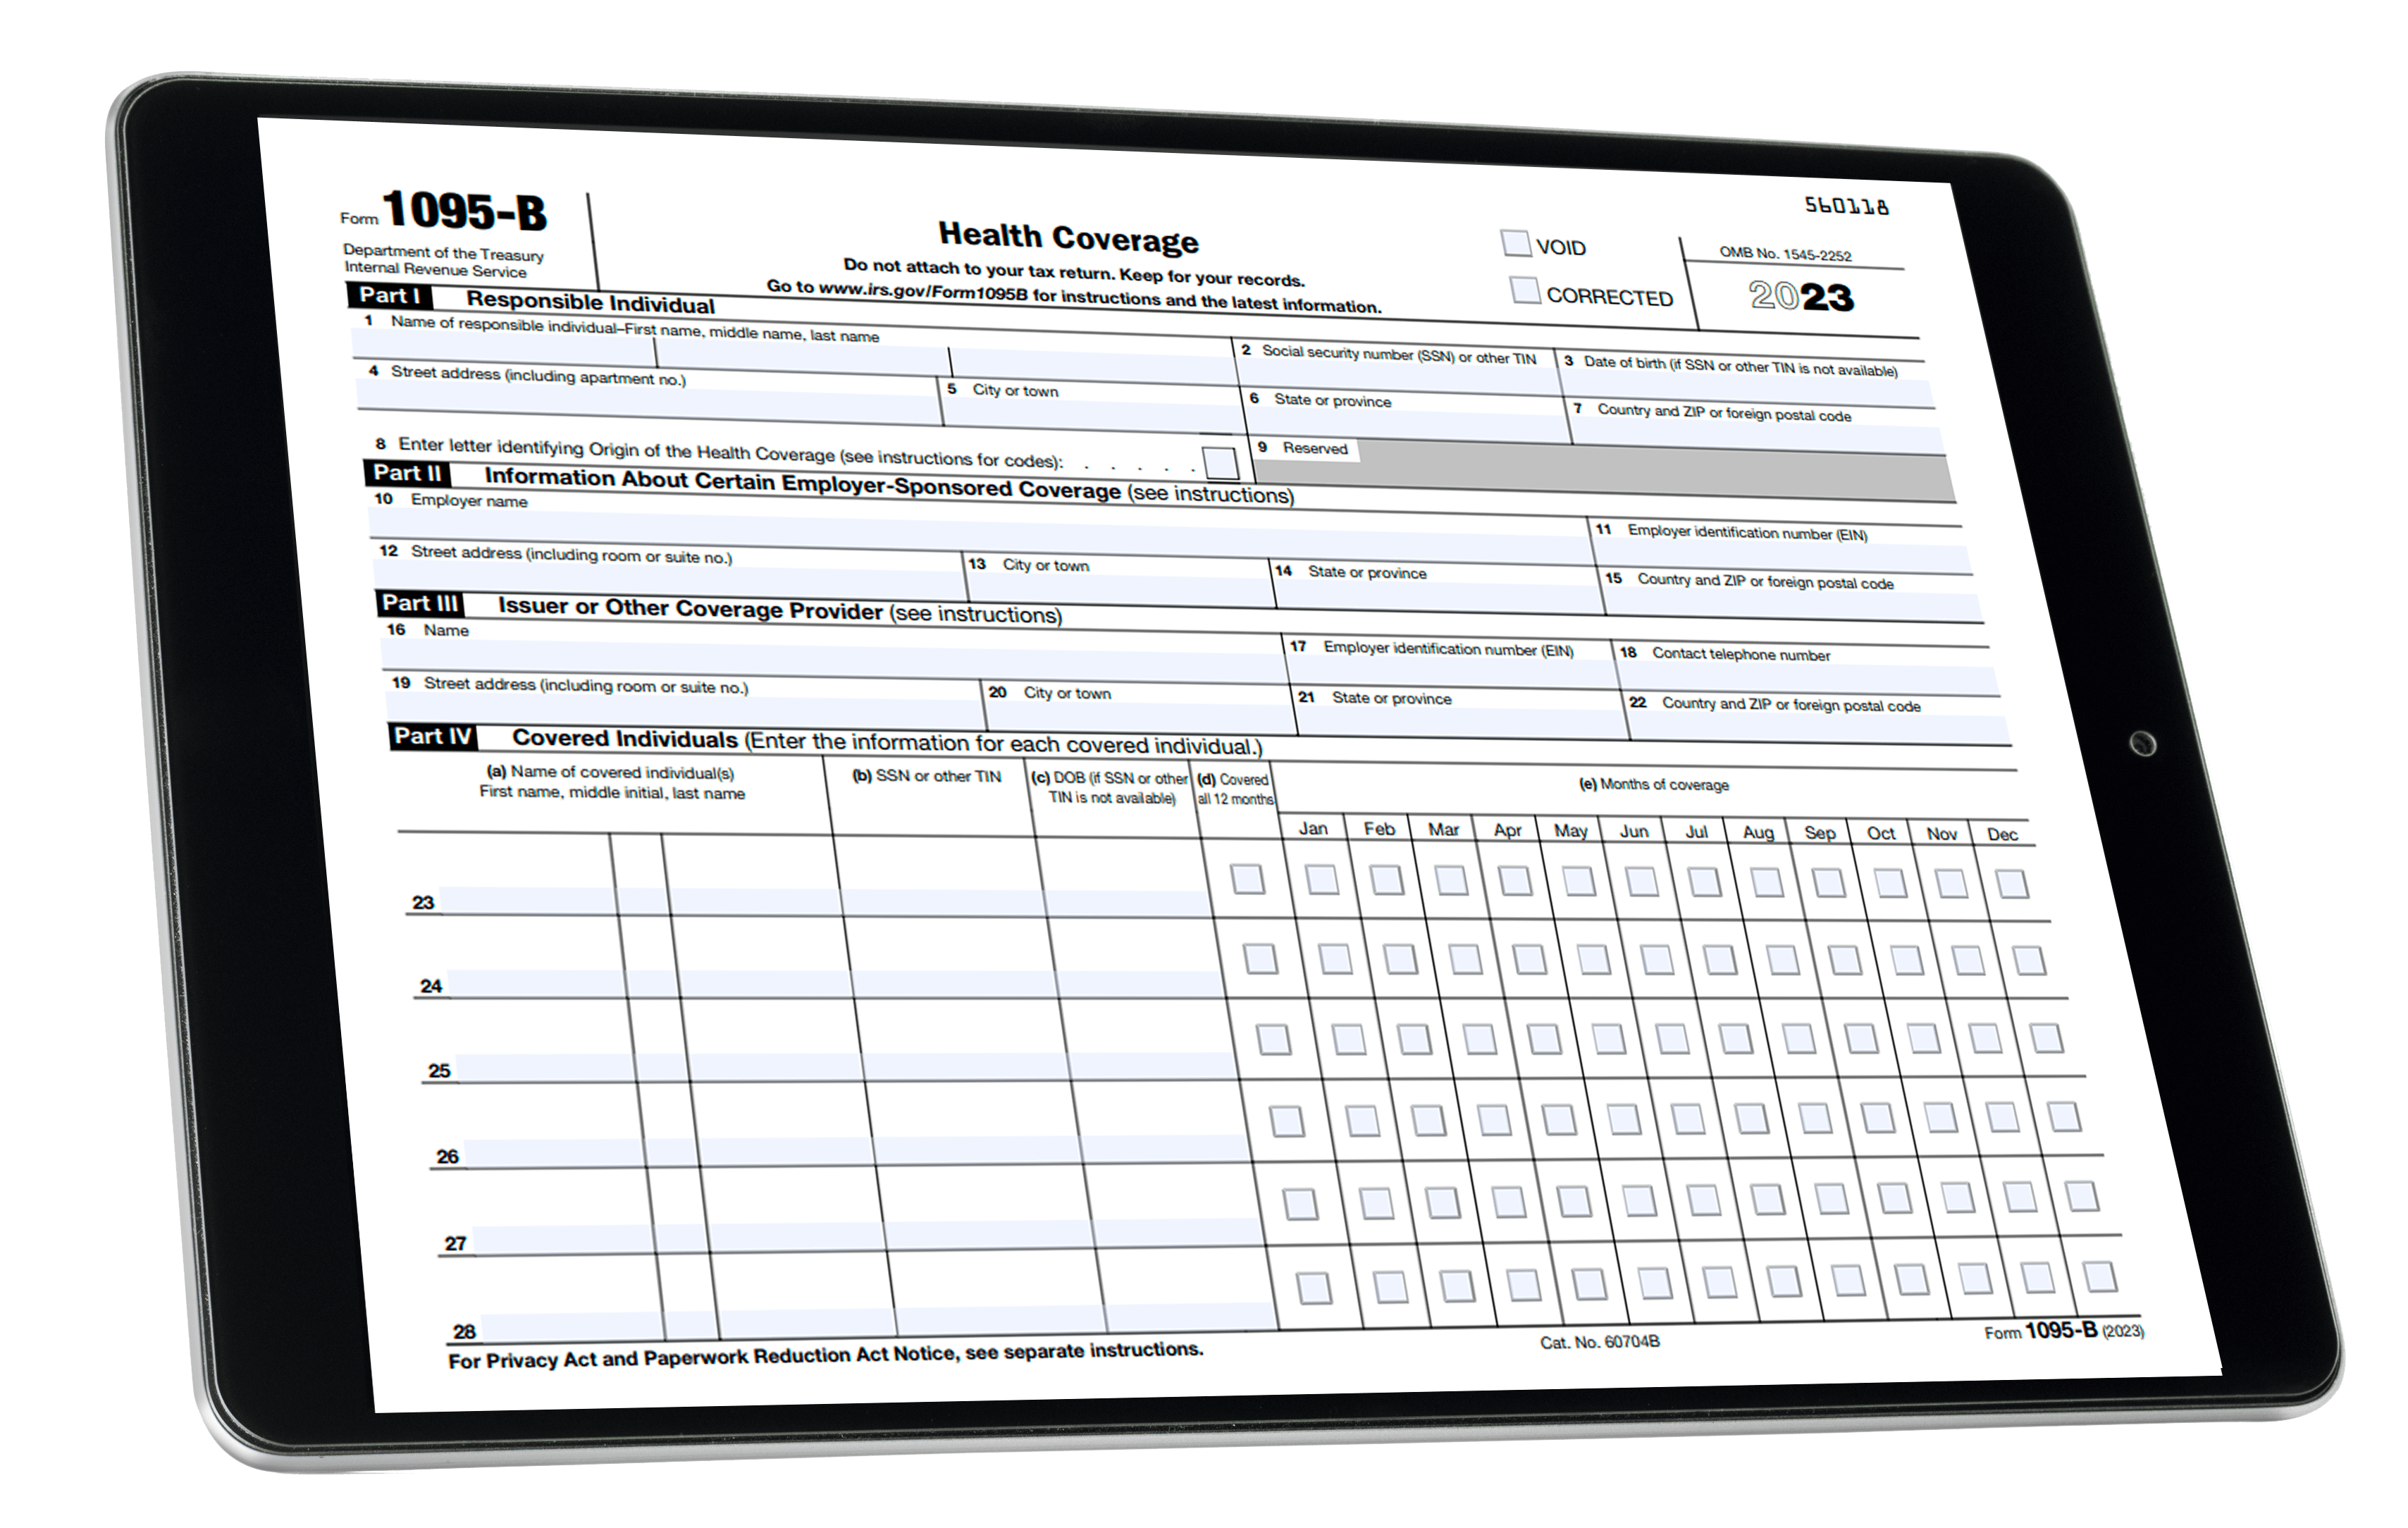 E-File IRS Form 1095-B, Health Coverage